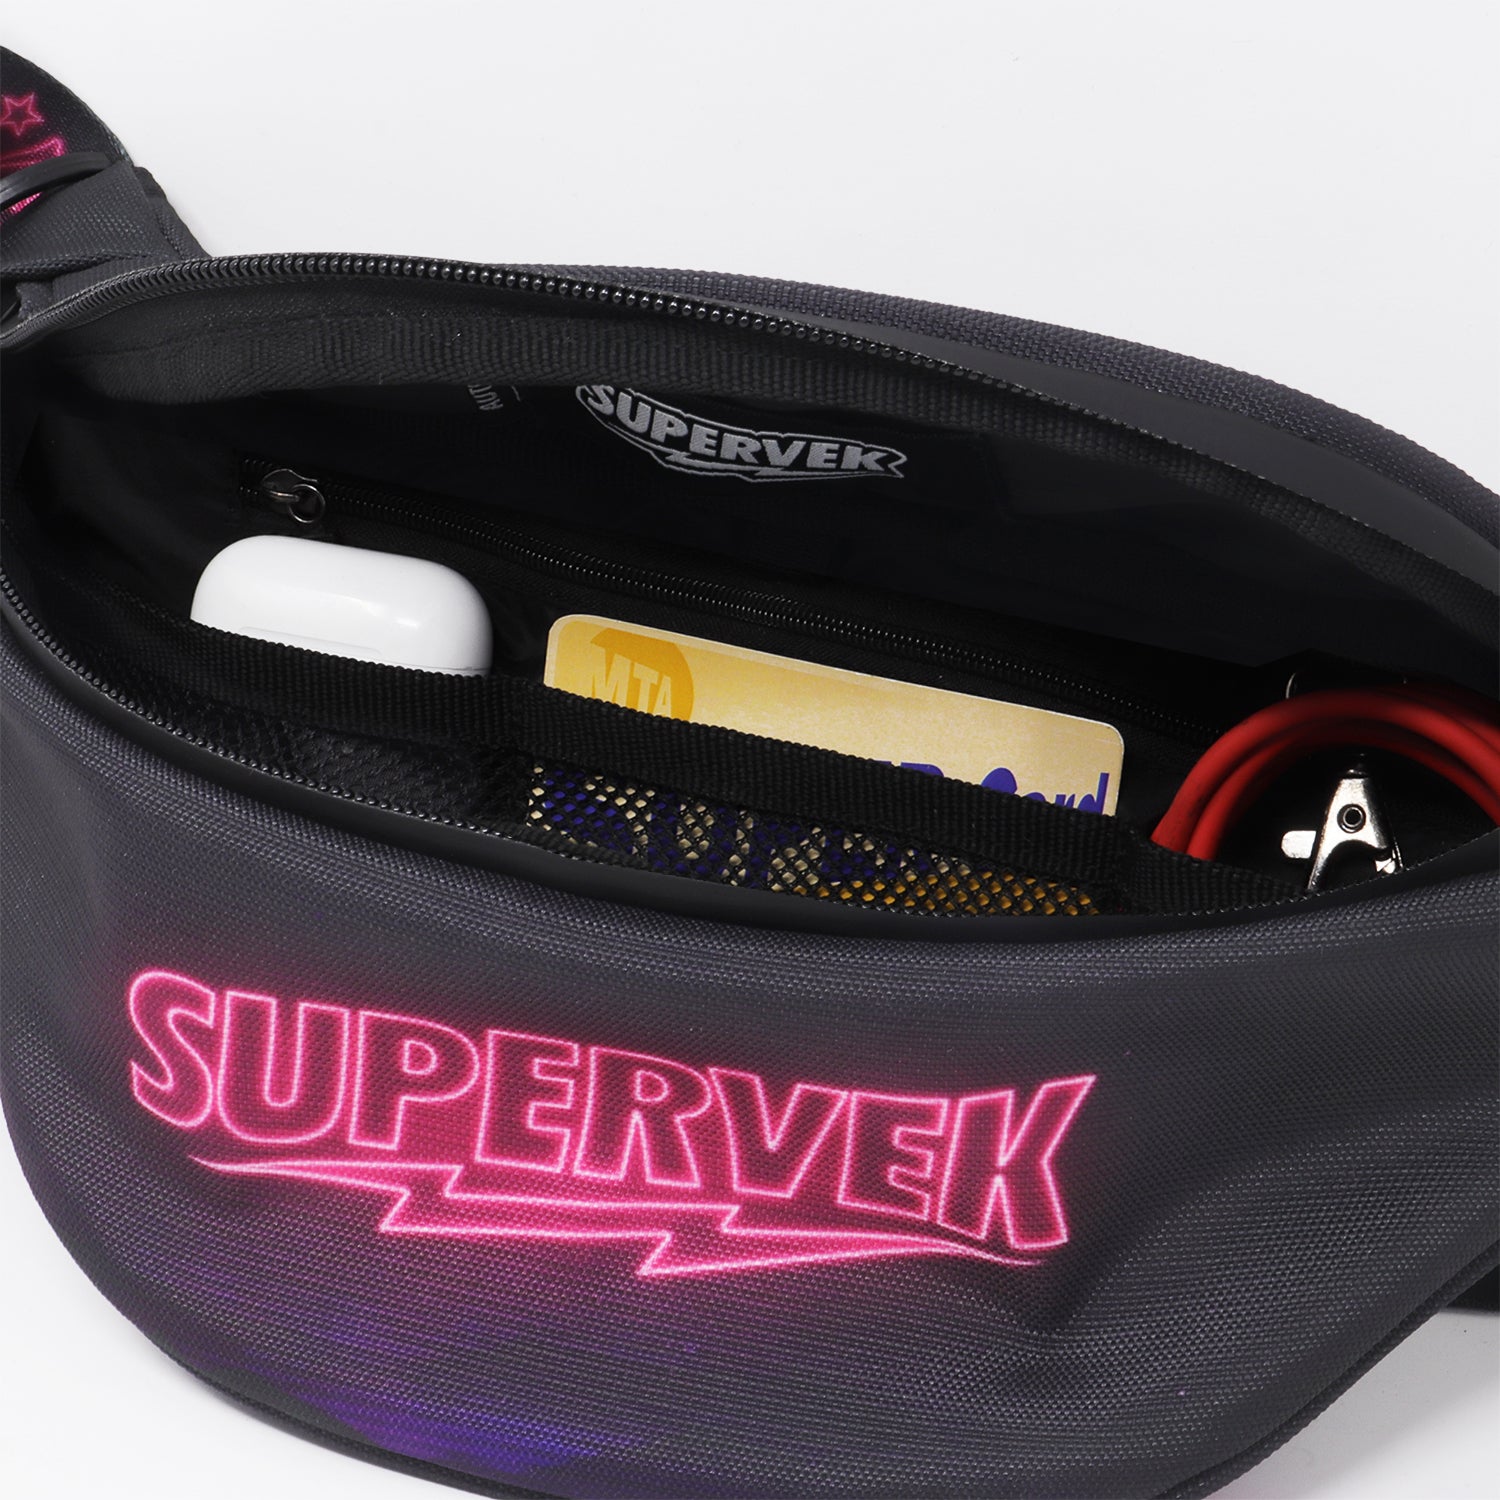 Supervek Crossbody Slinger - Veker - Urban Functional Fanny Hip Bag for Everyday Essentials - Inside